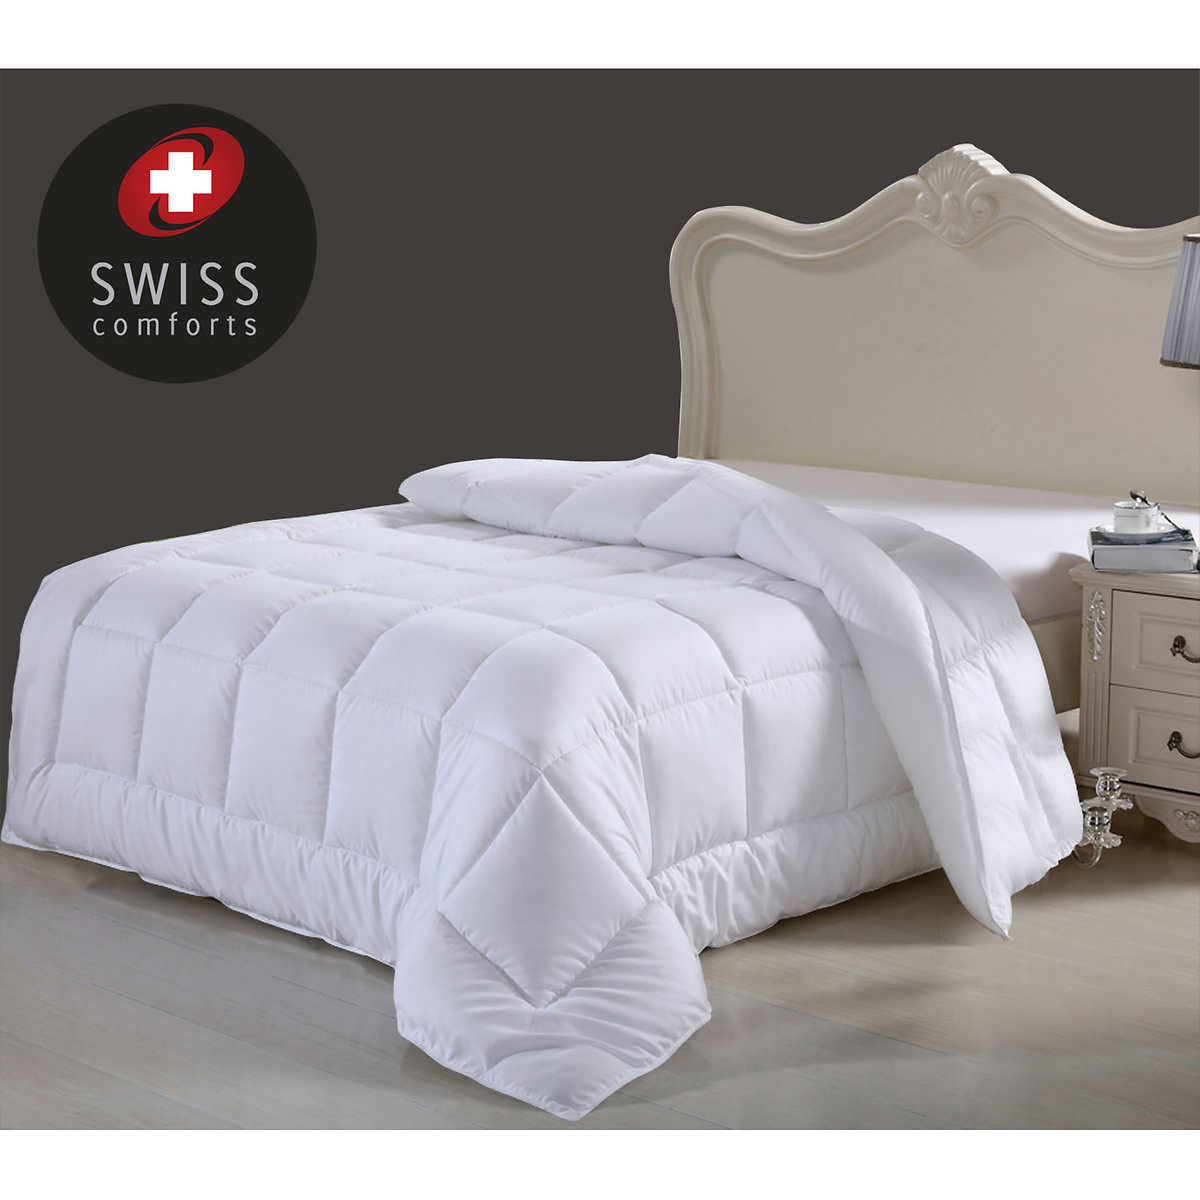 Swiss Comforts Down Alternative Duvet